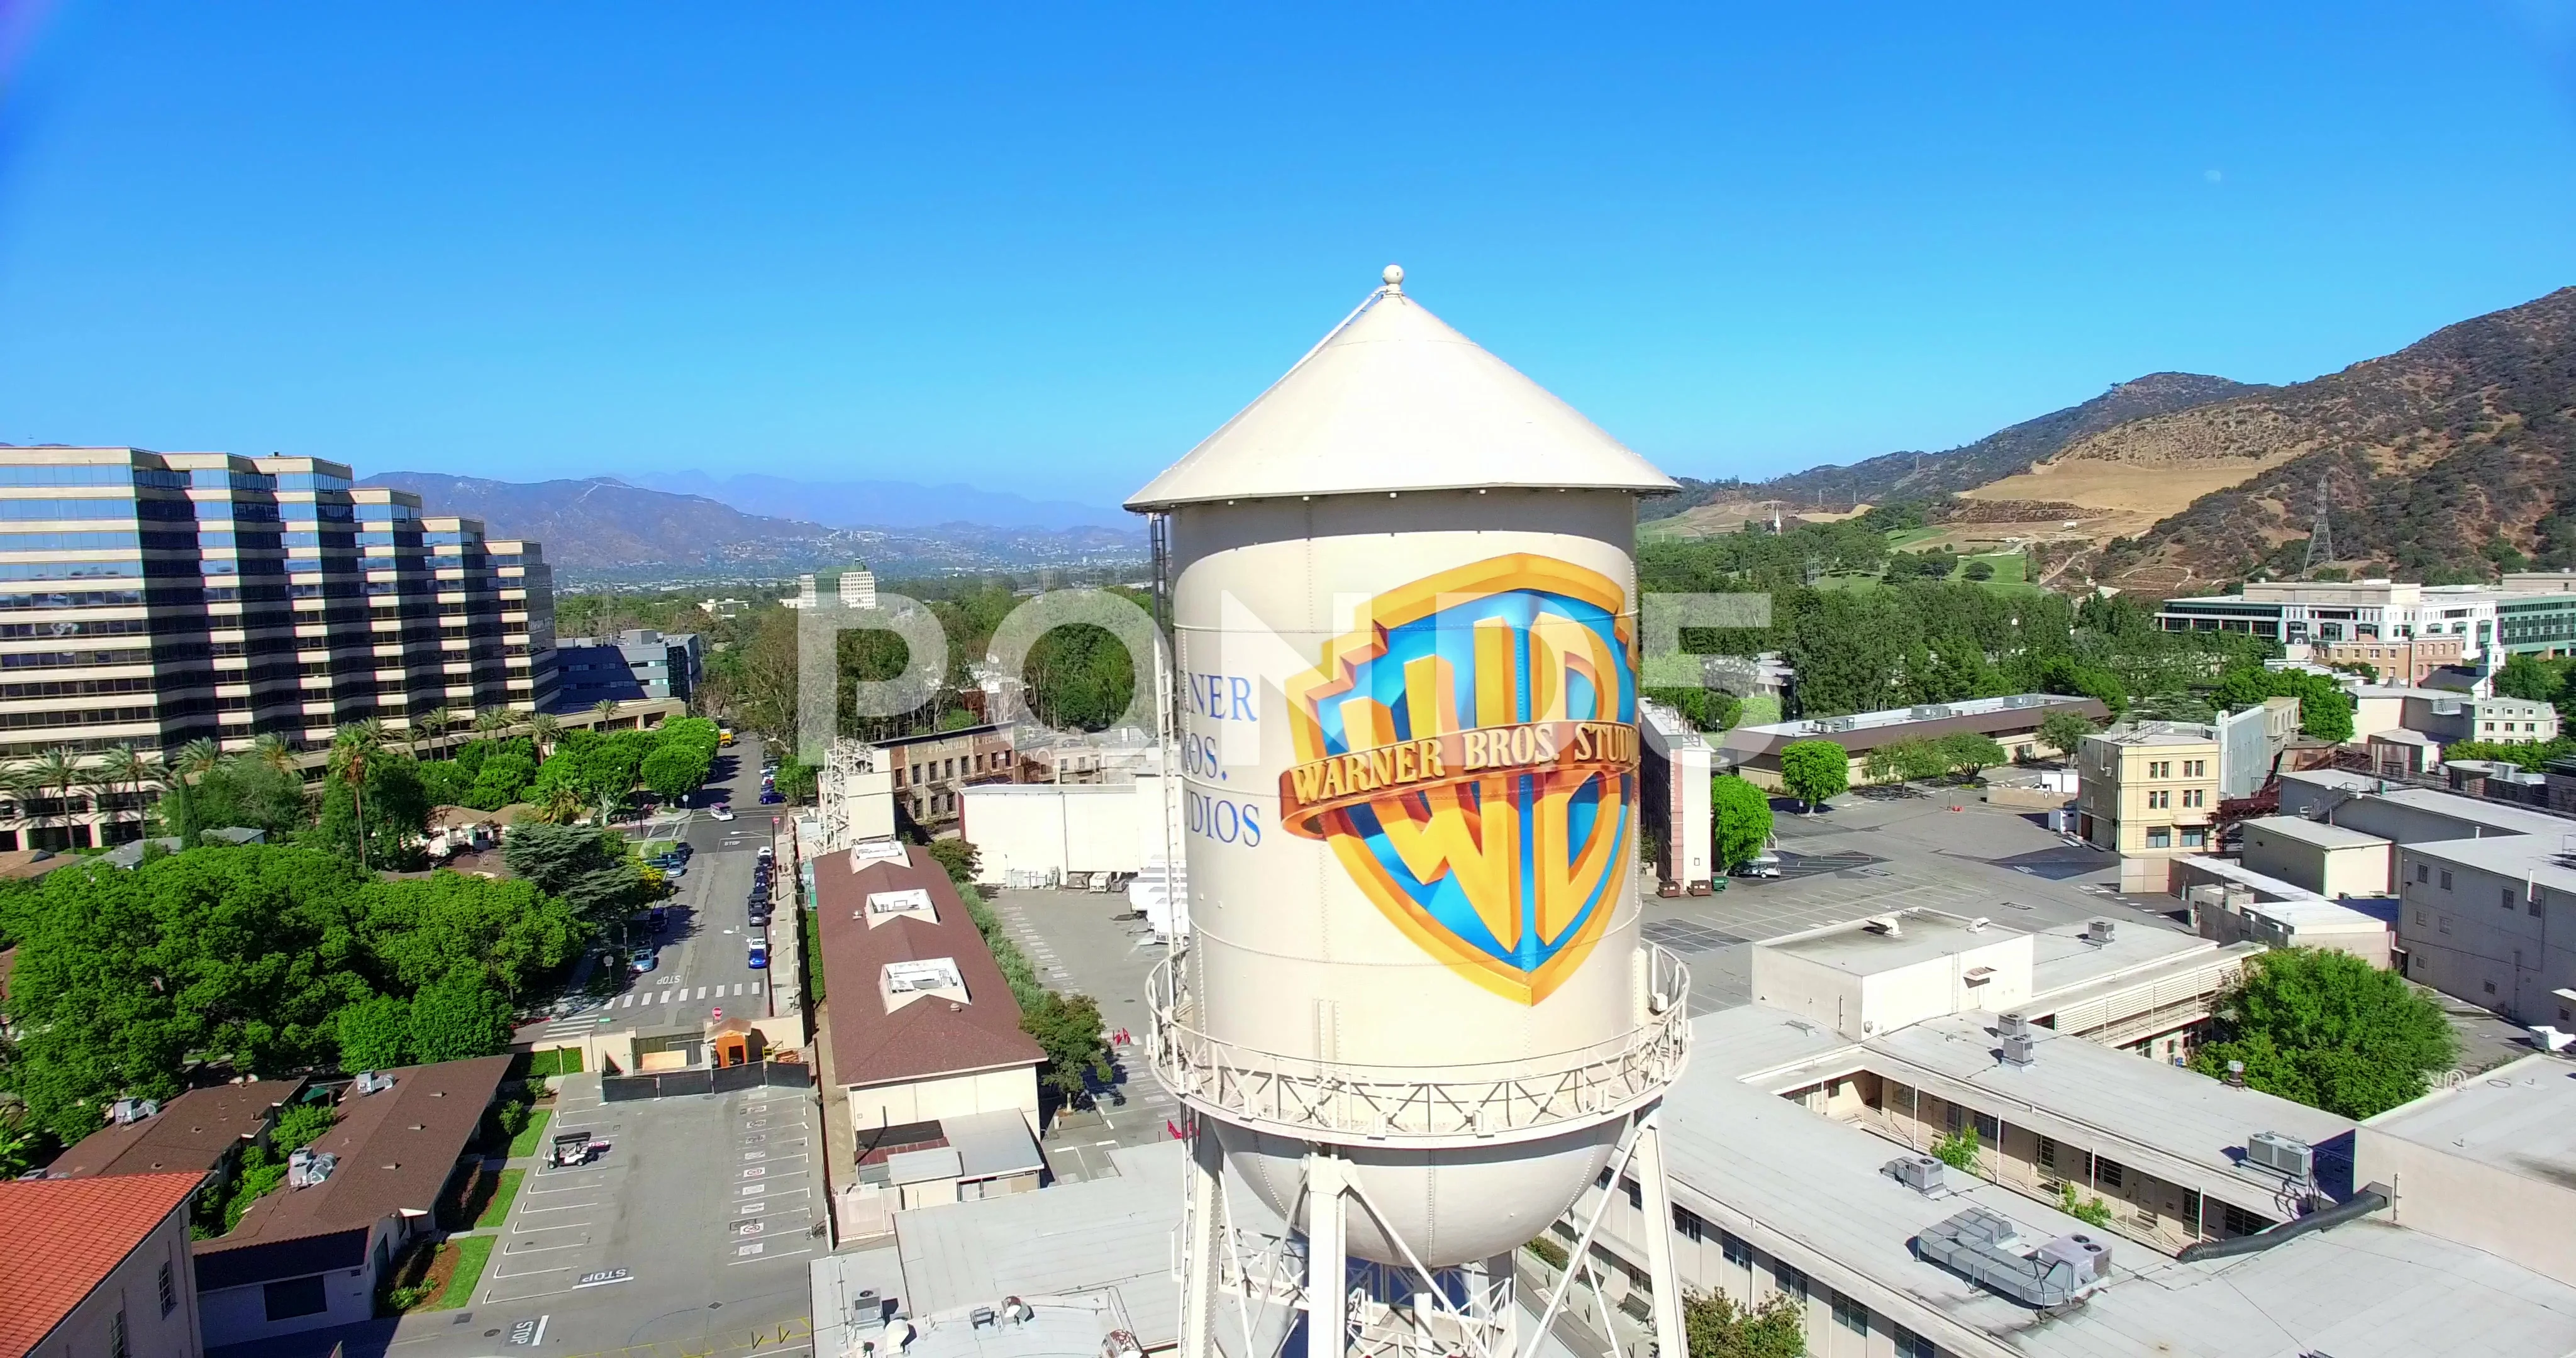 Warner Brothers Movie Studios Stock Footage ~ Royalty Free Stock Videos |  Pond5